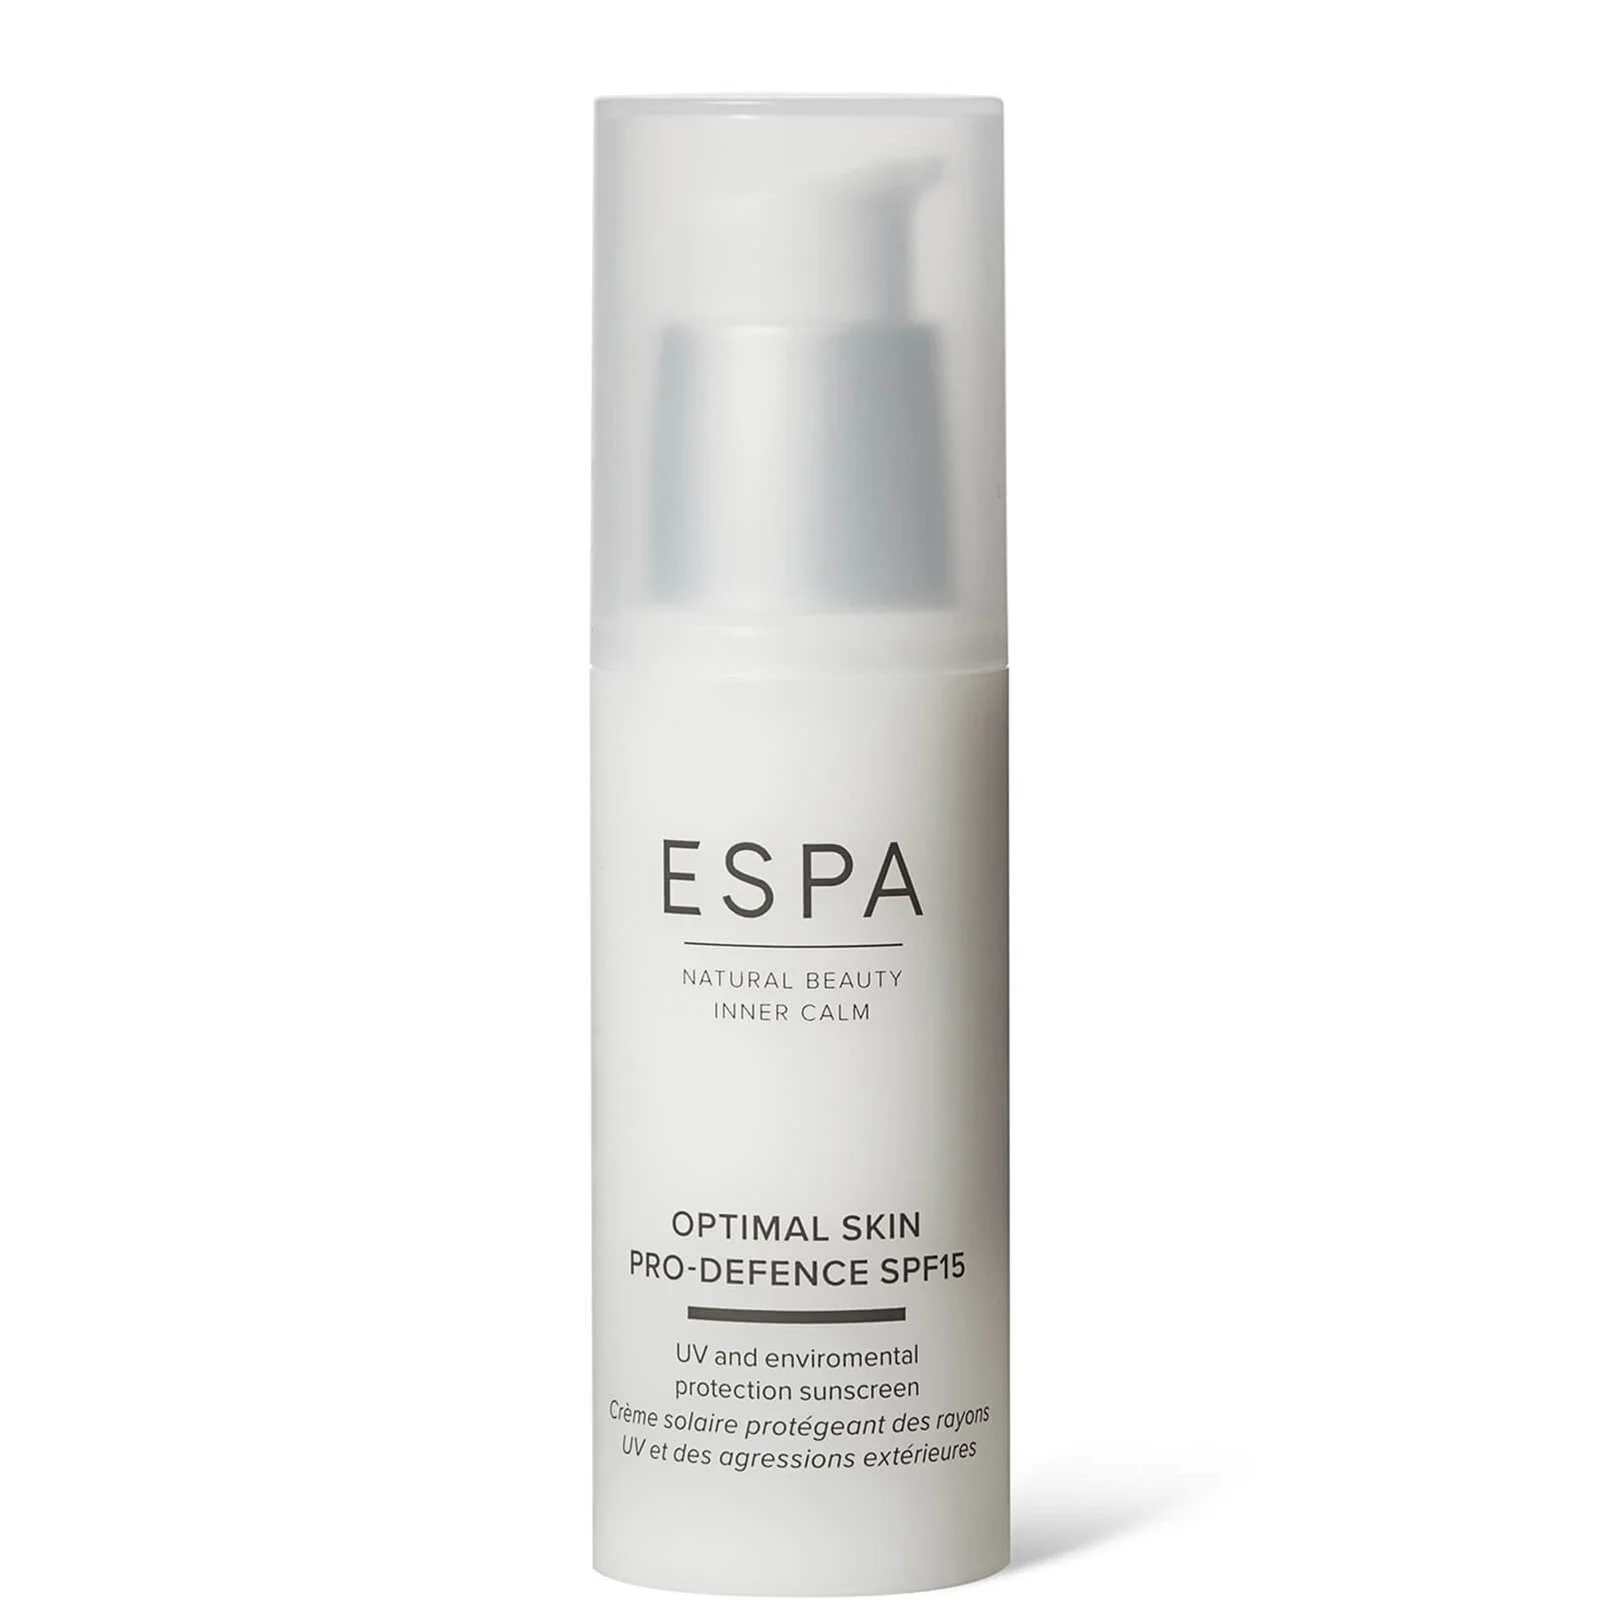 ESPA Optimal Skin ProDefence SPF15 Daily Shield 25ml Image 1